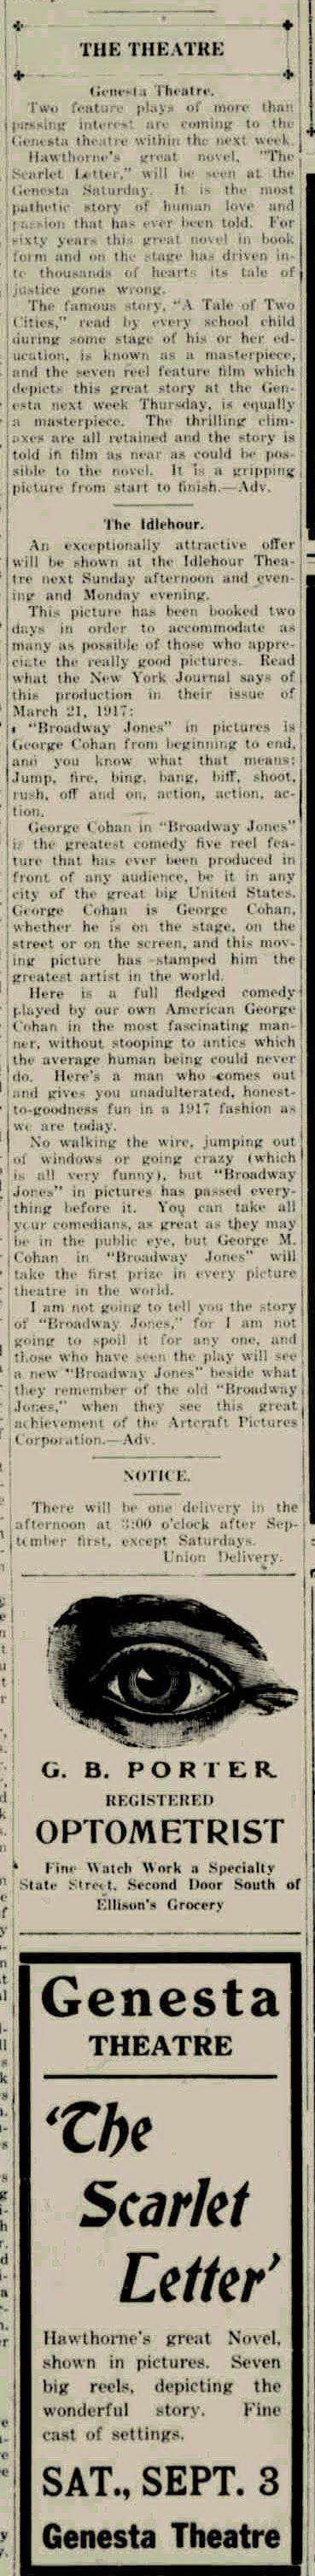 Regent Theater - Aug 30 1917 Idlehour And Genesta